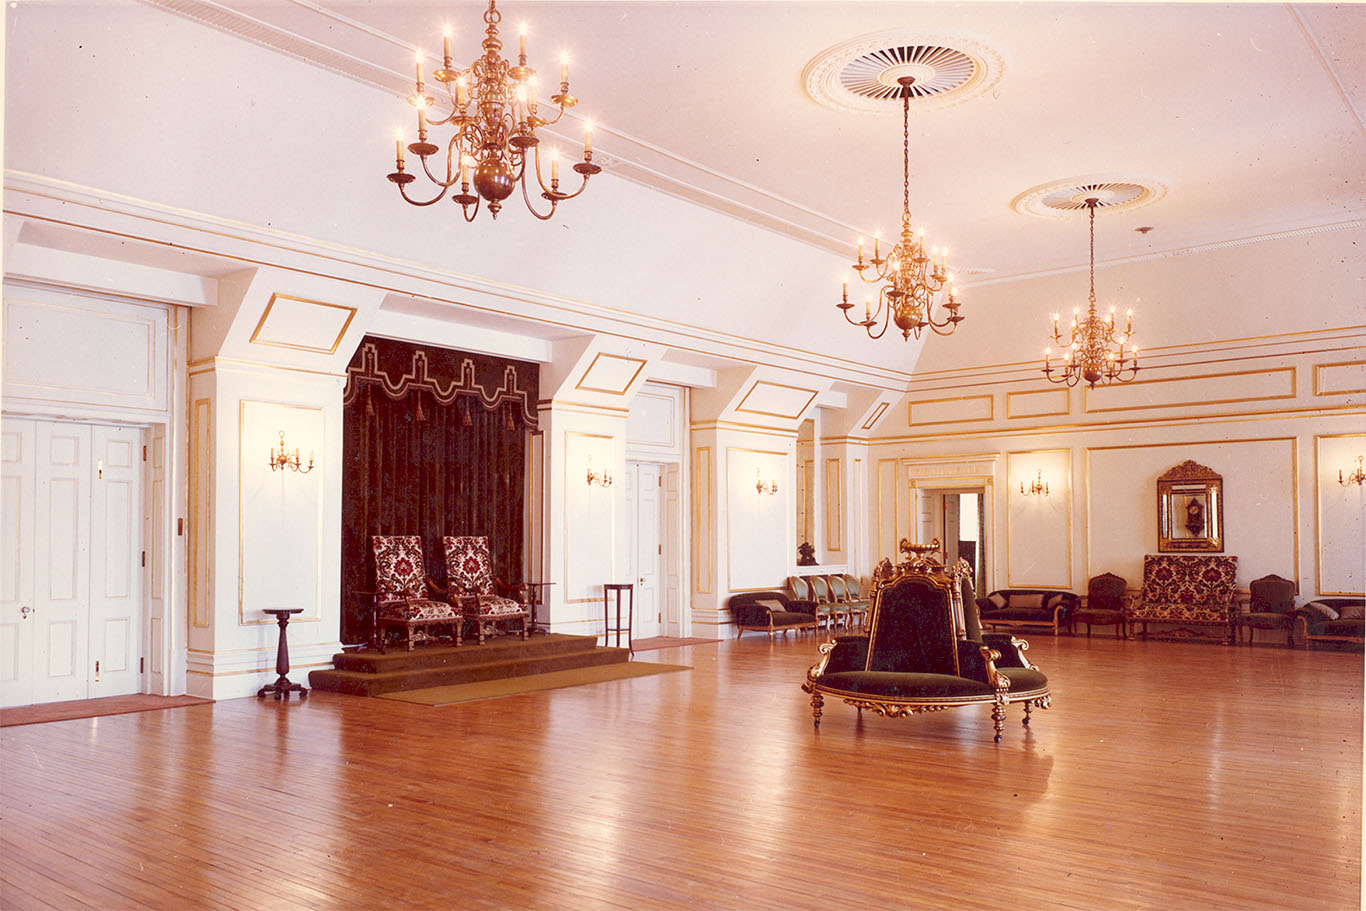 Ballroom, before 1976